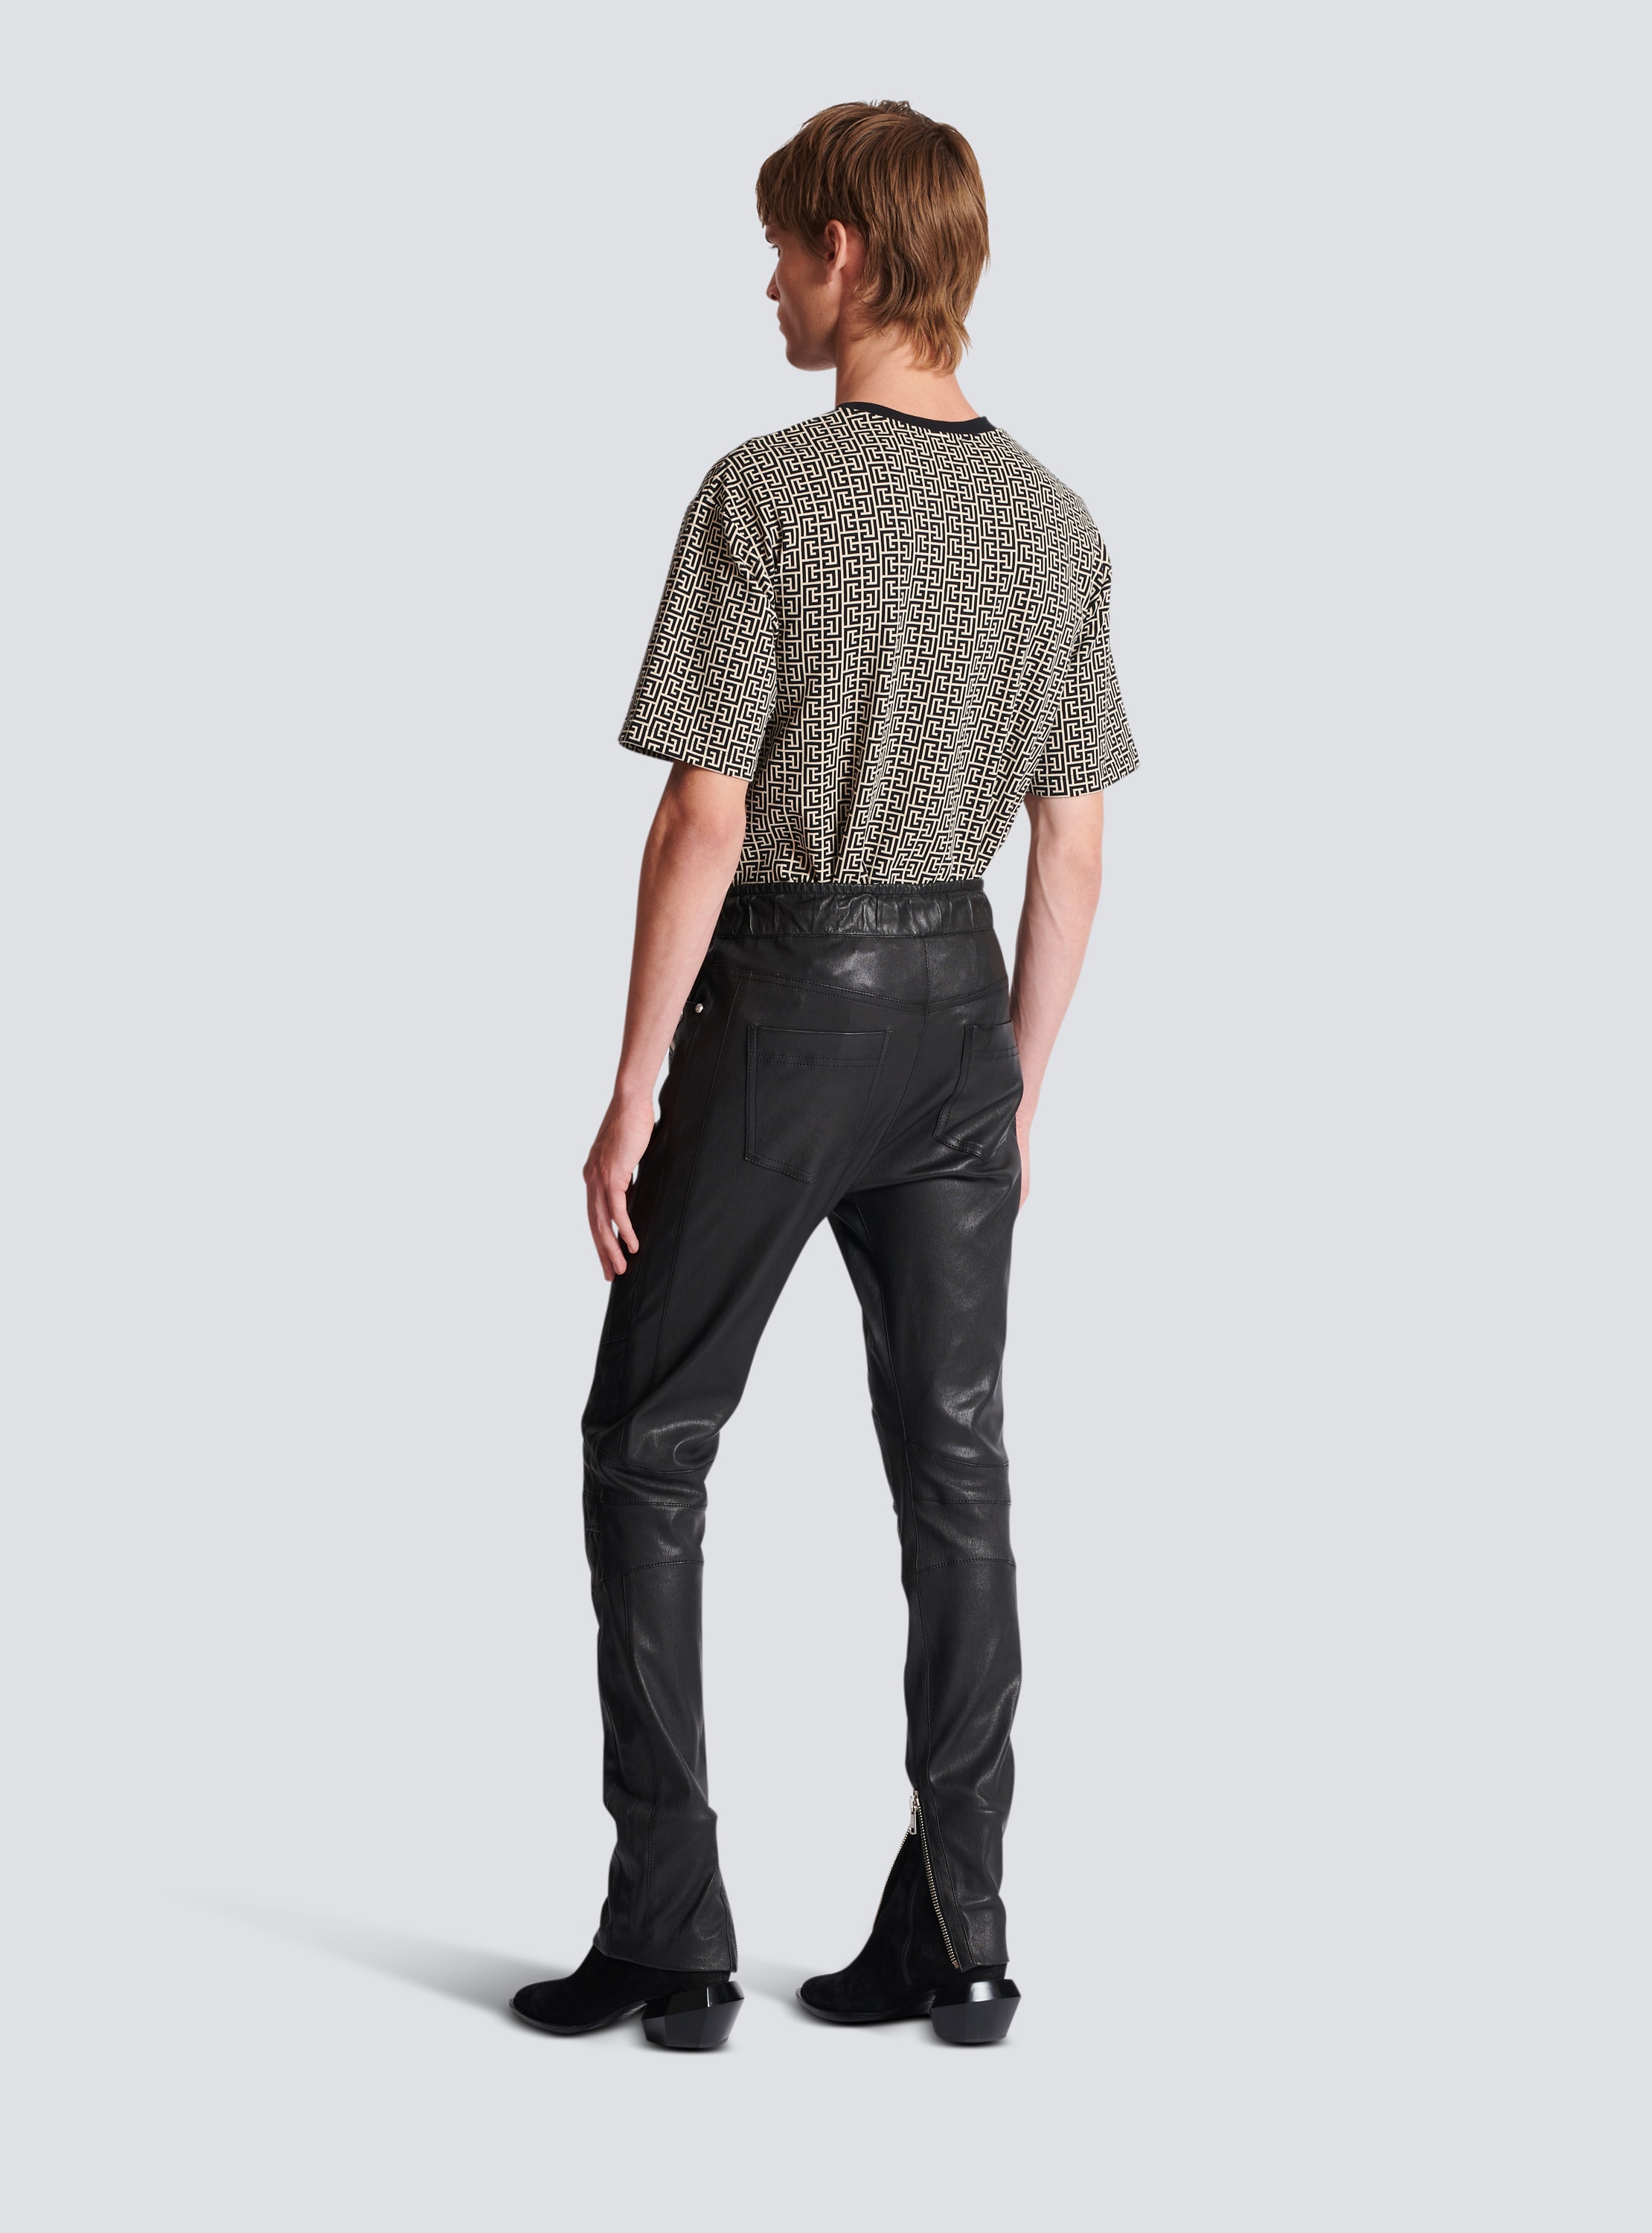 2016 Balmain leather pants man 28-38